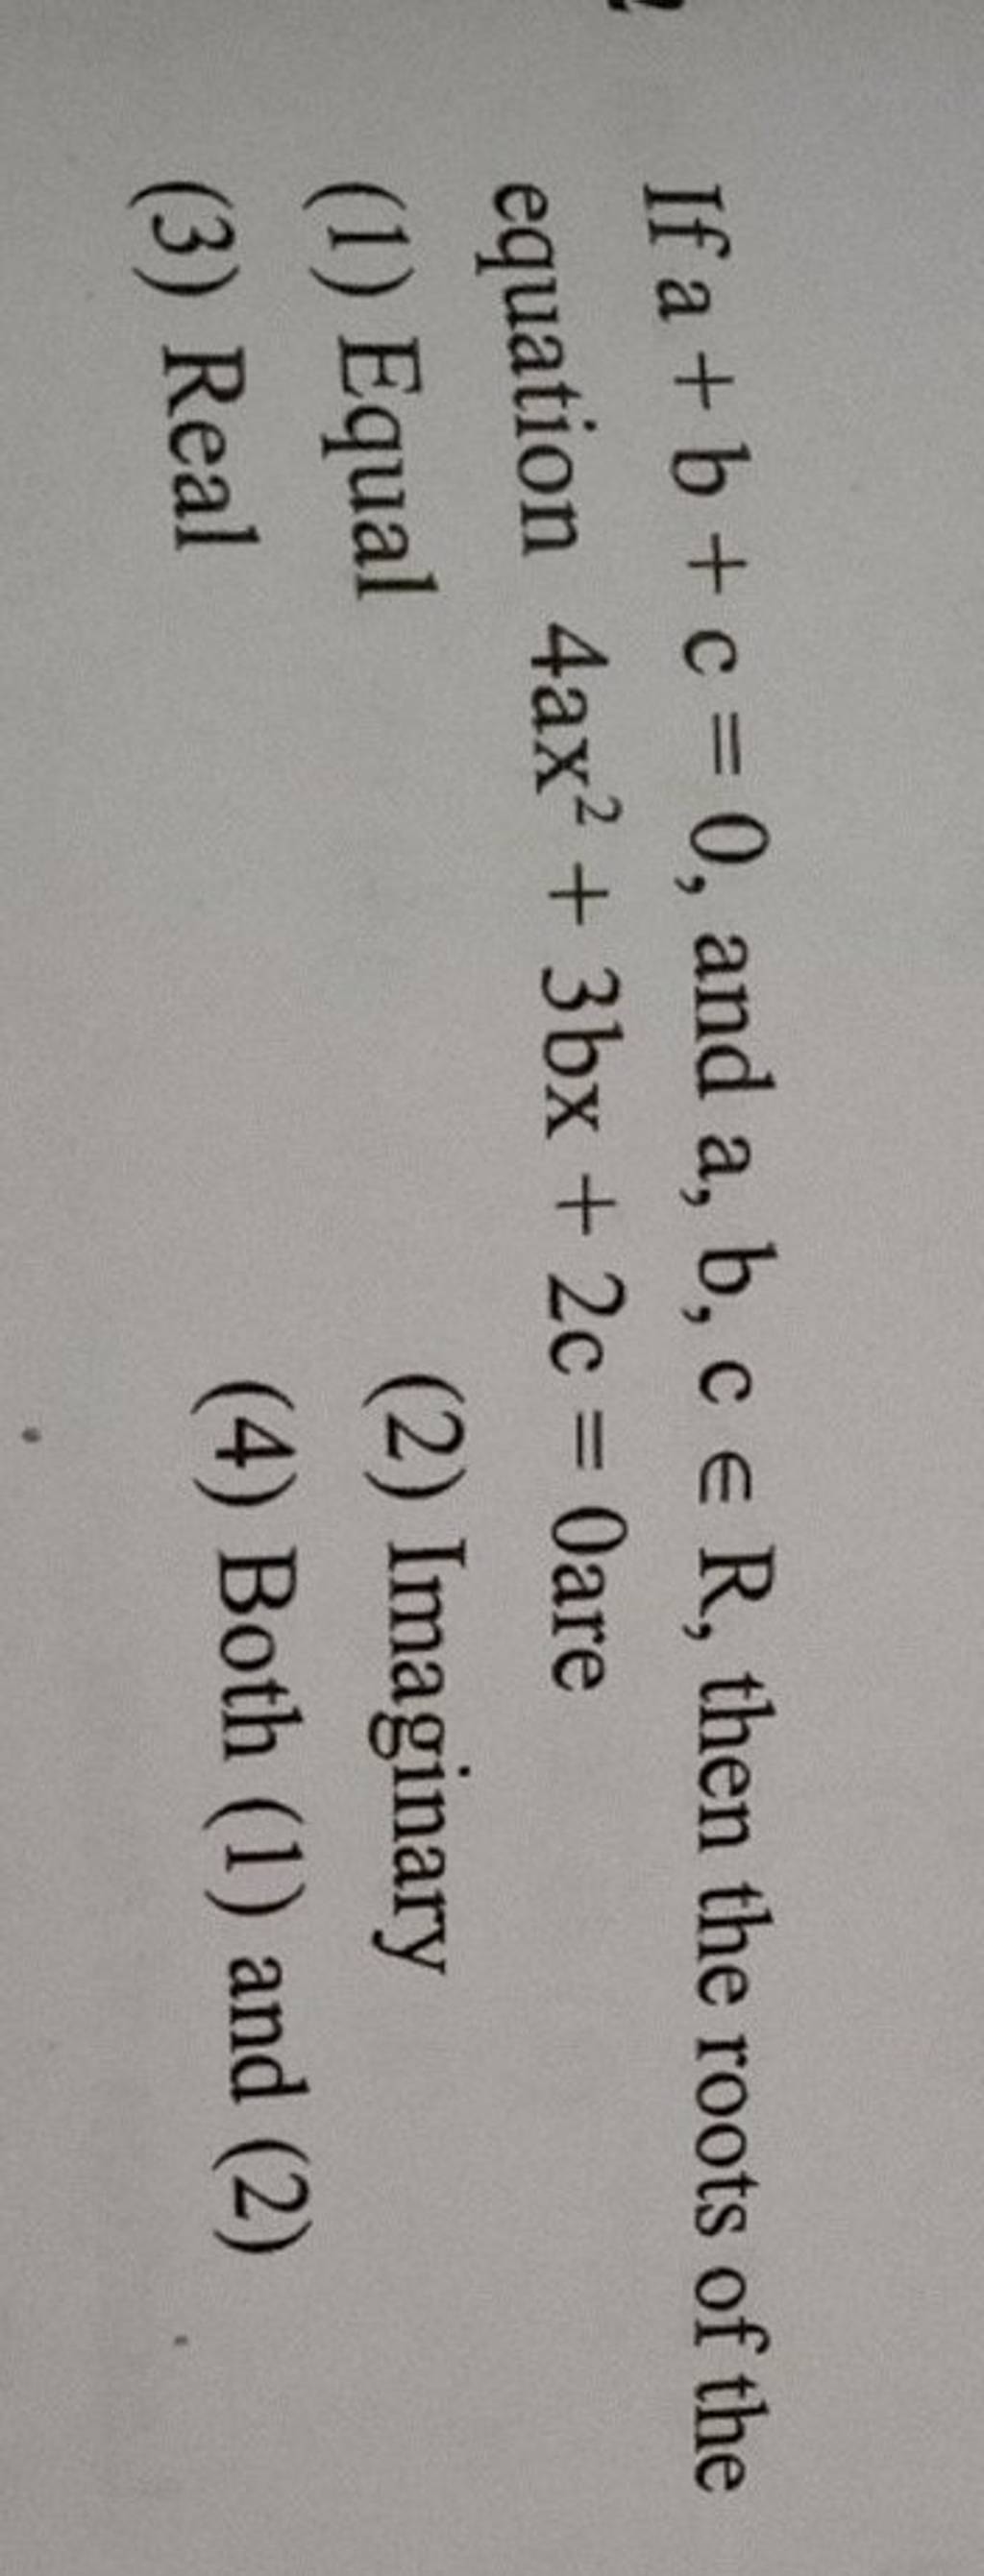 If a+b+c=0, and a,b,c∈R, then the roots of the equation 4ax2+3bx+2c=0 